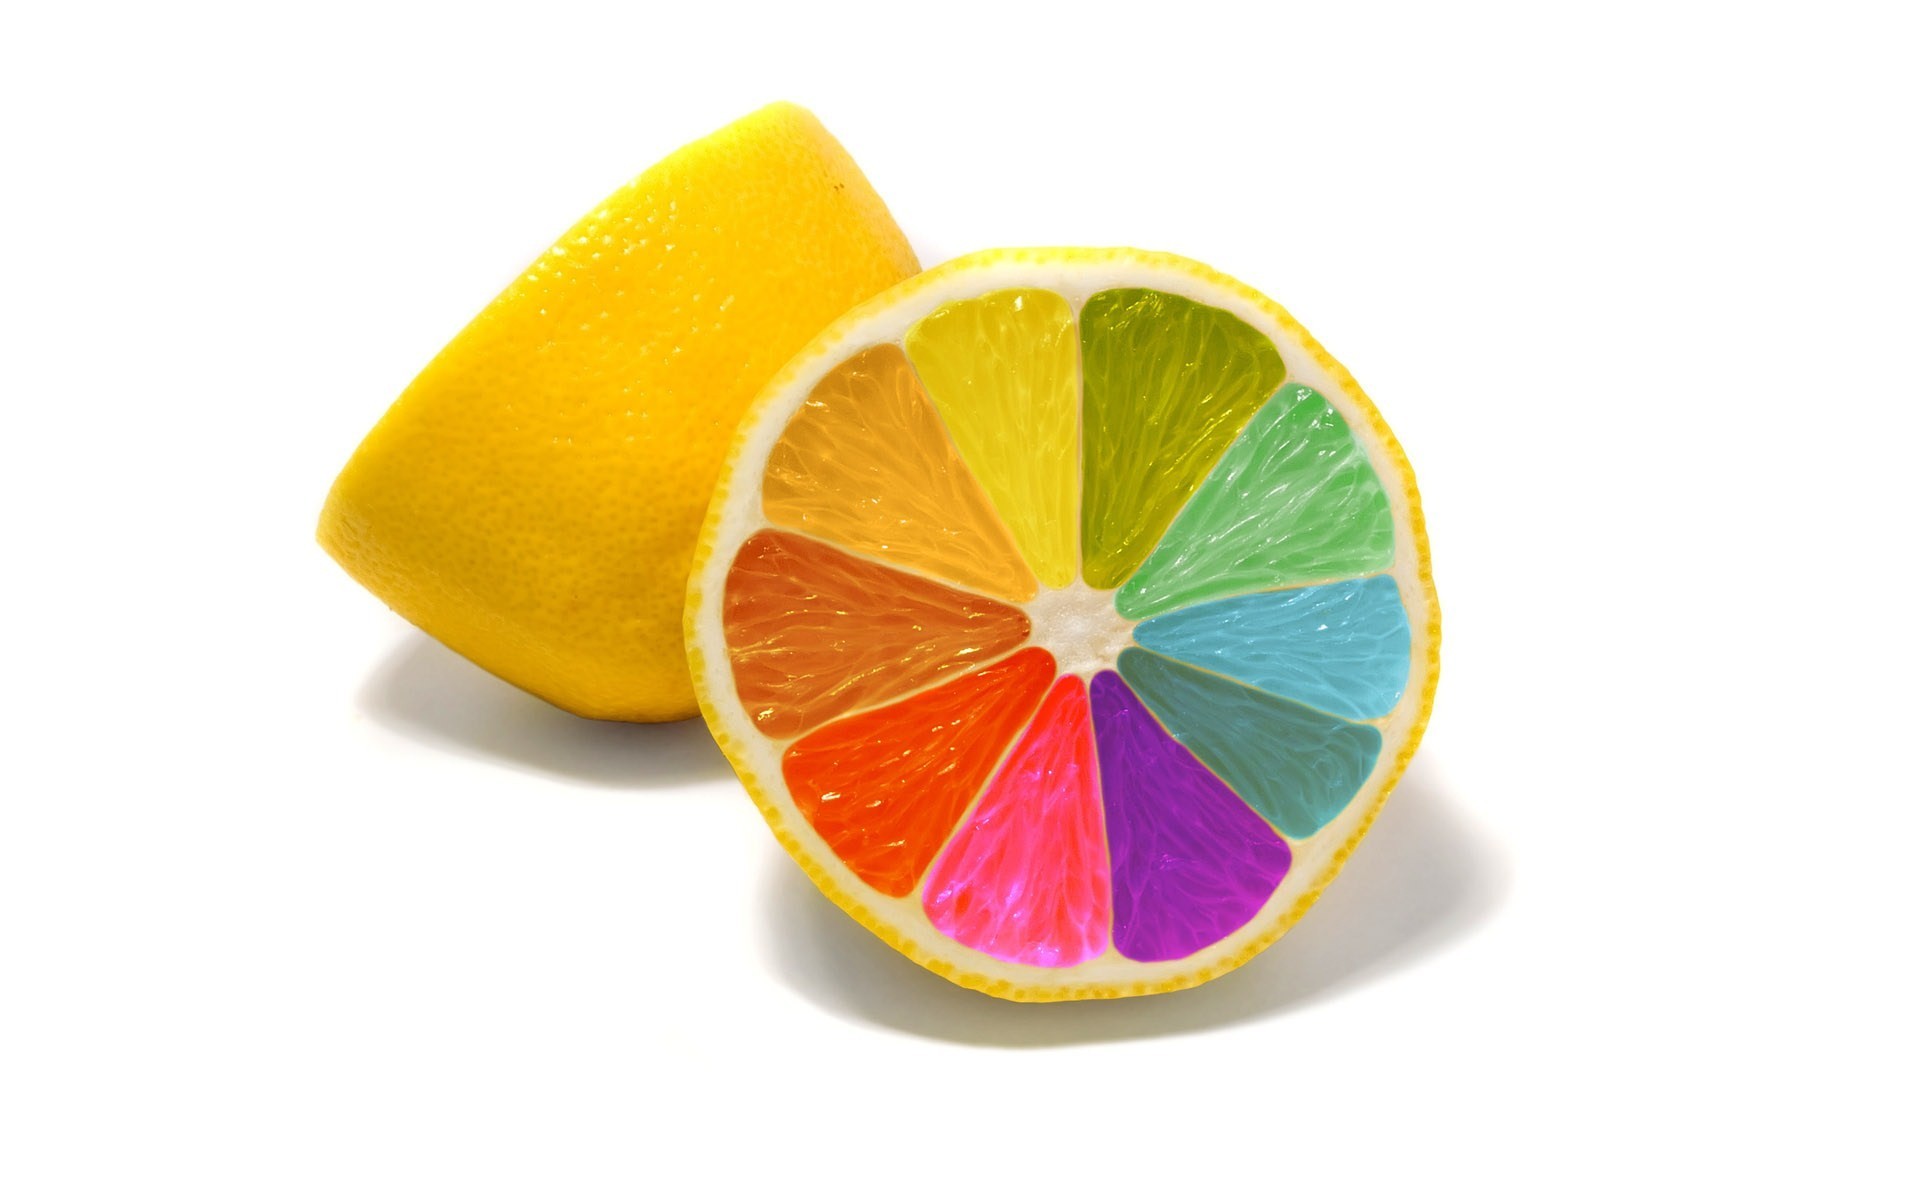 General 1920x1200 colorful food simple background minimalism lemons digital art white background fruit